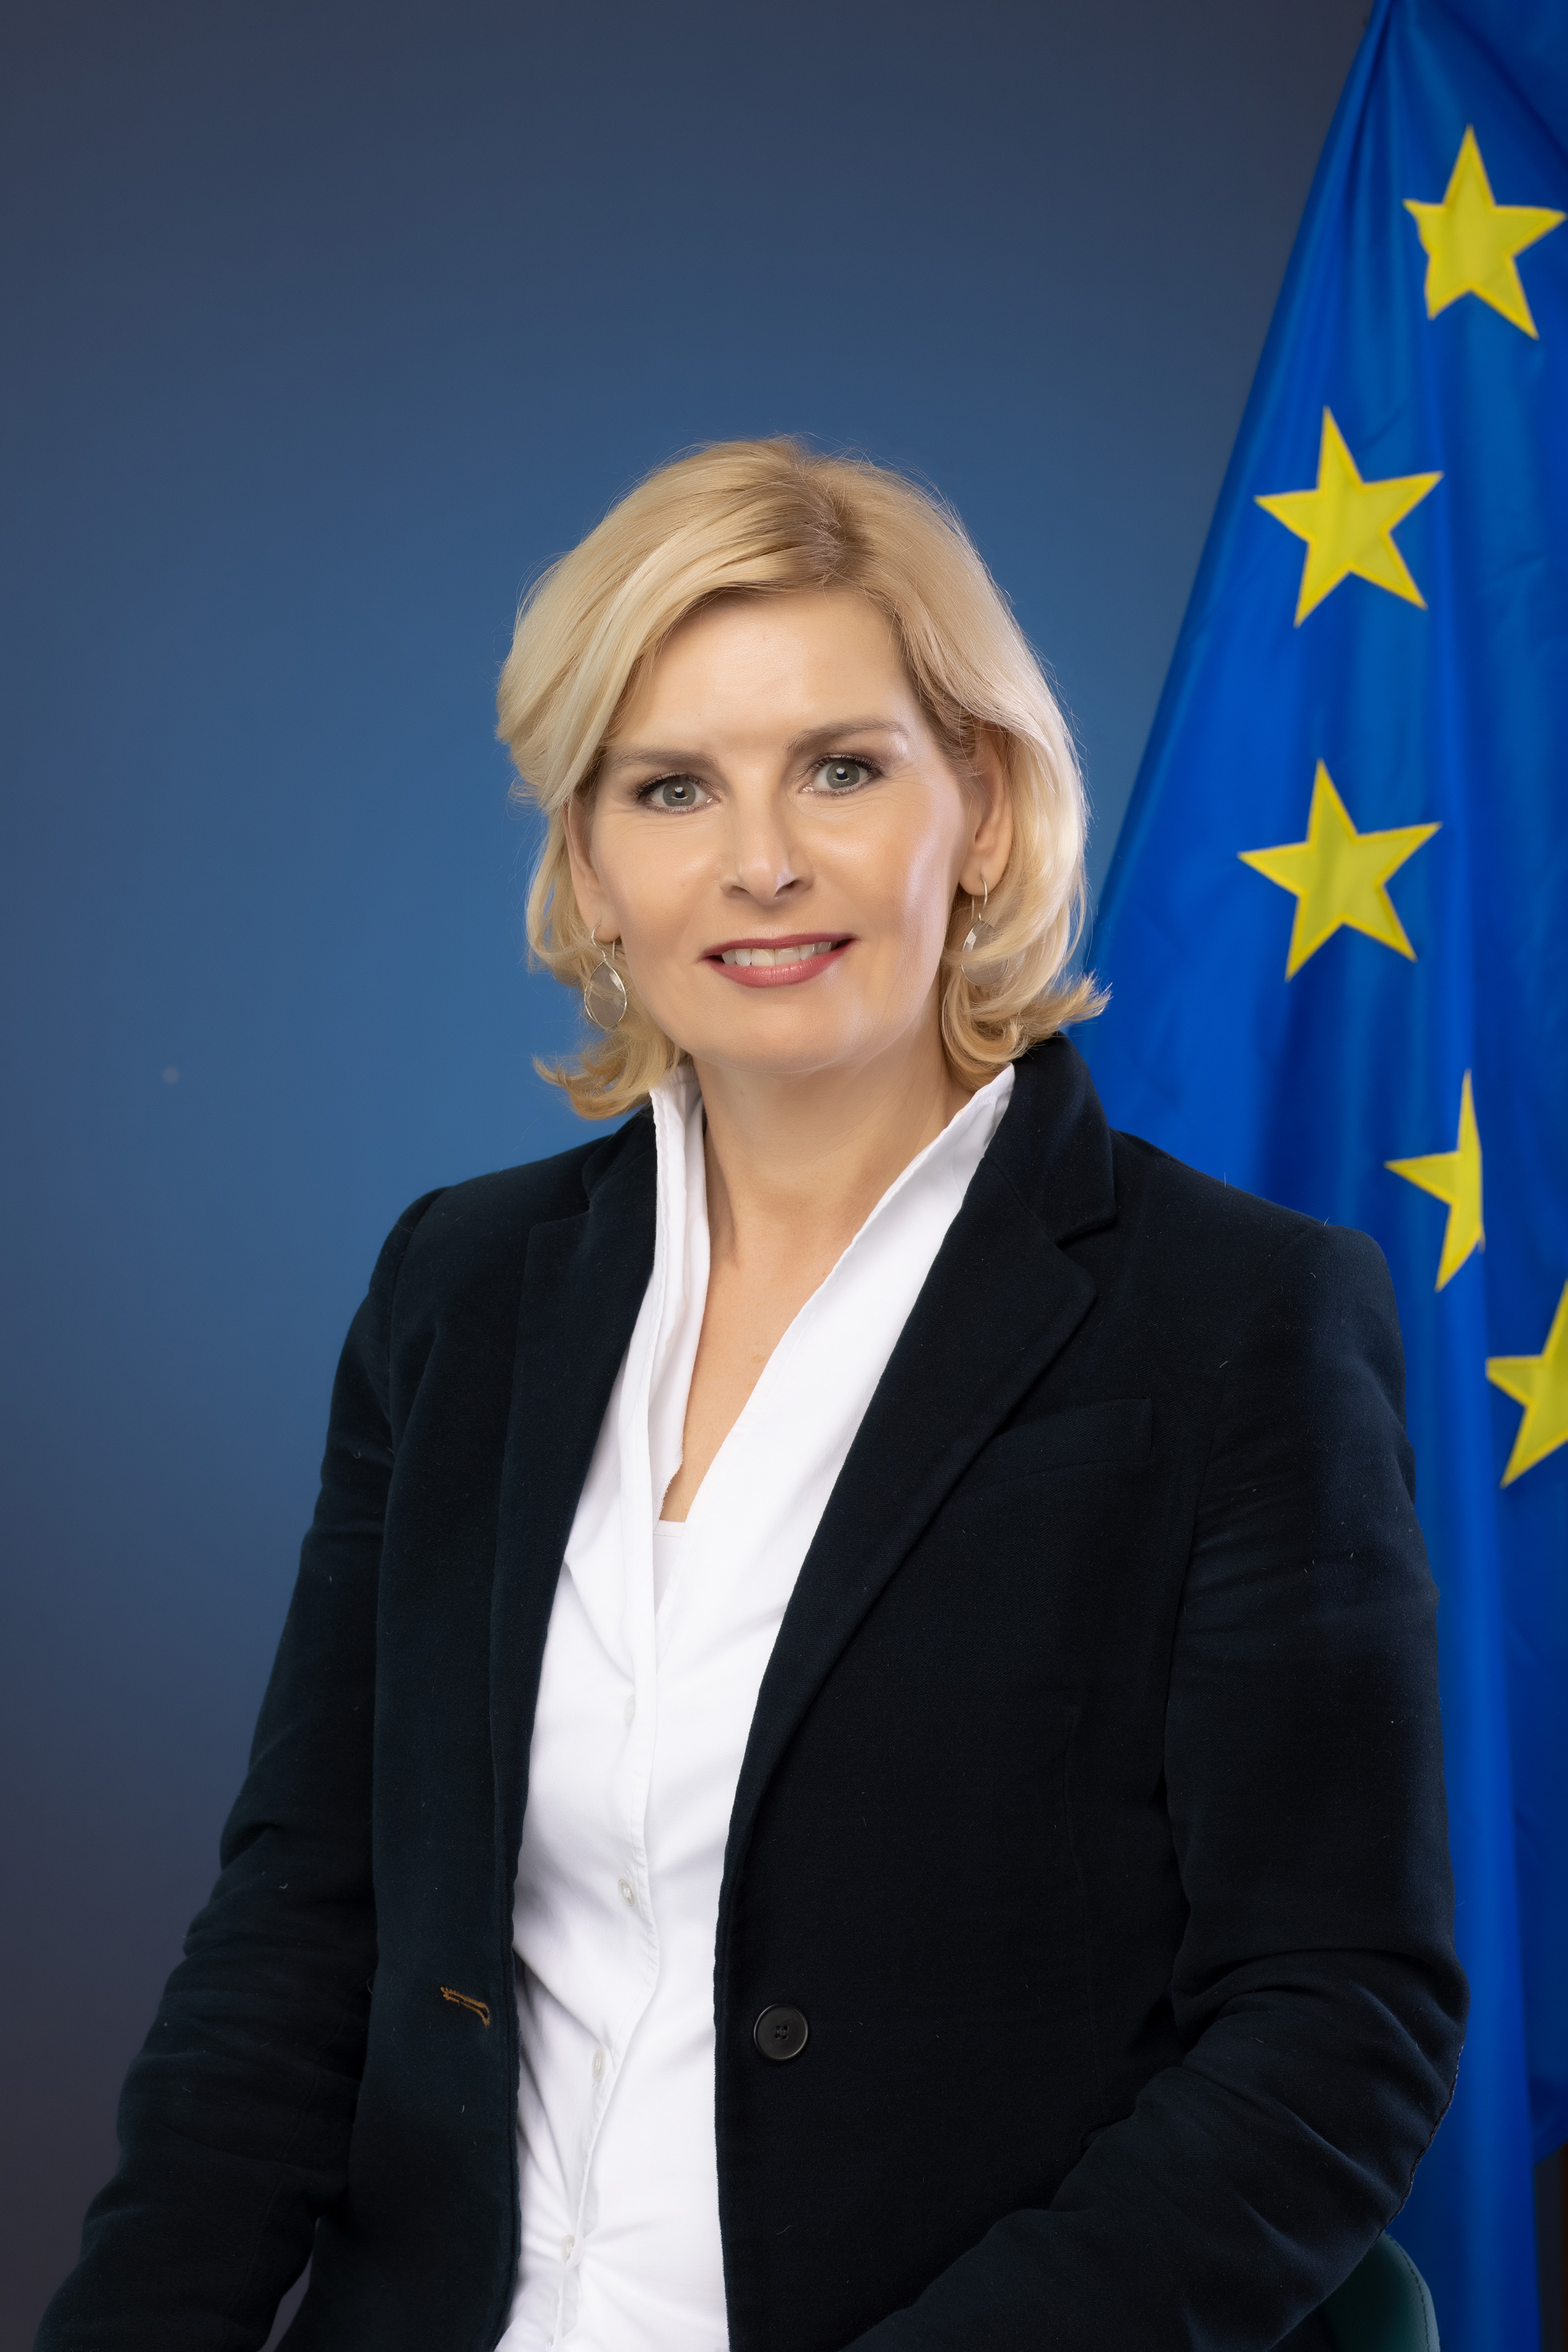 Photograph of European Prosecutor for Austria Ingrid Maschl-Clausen